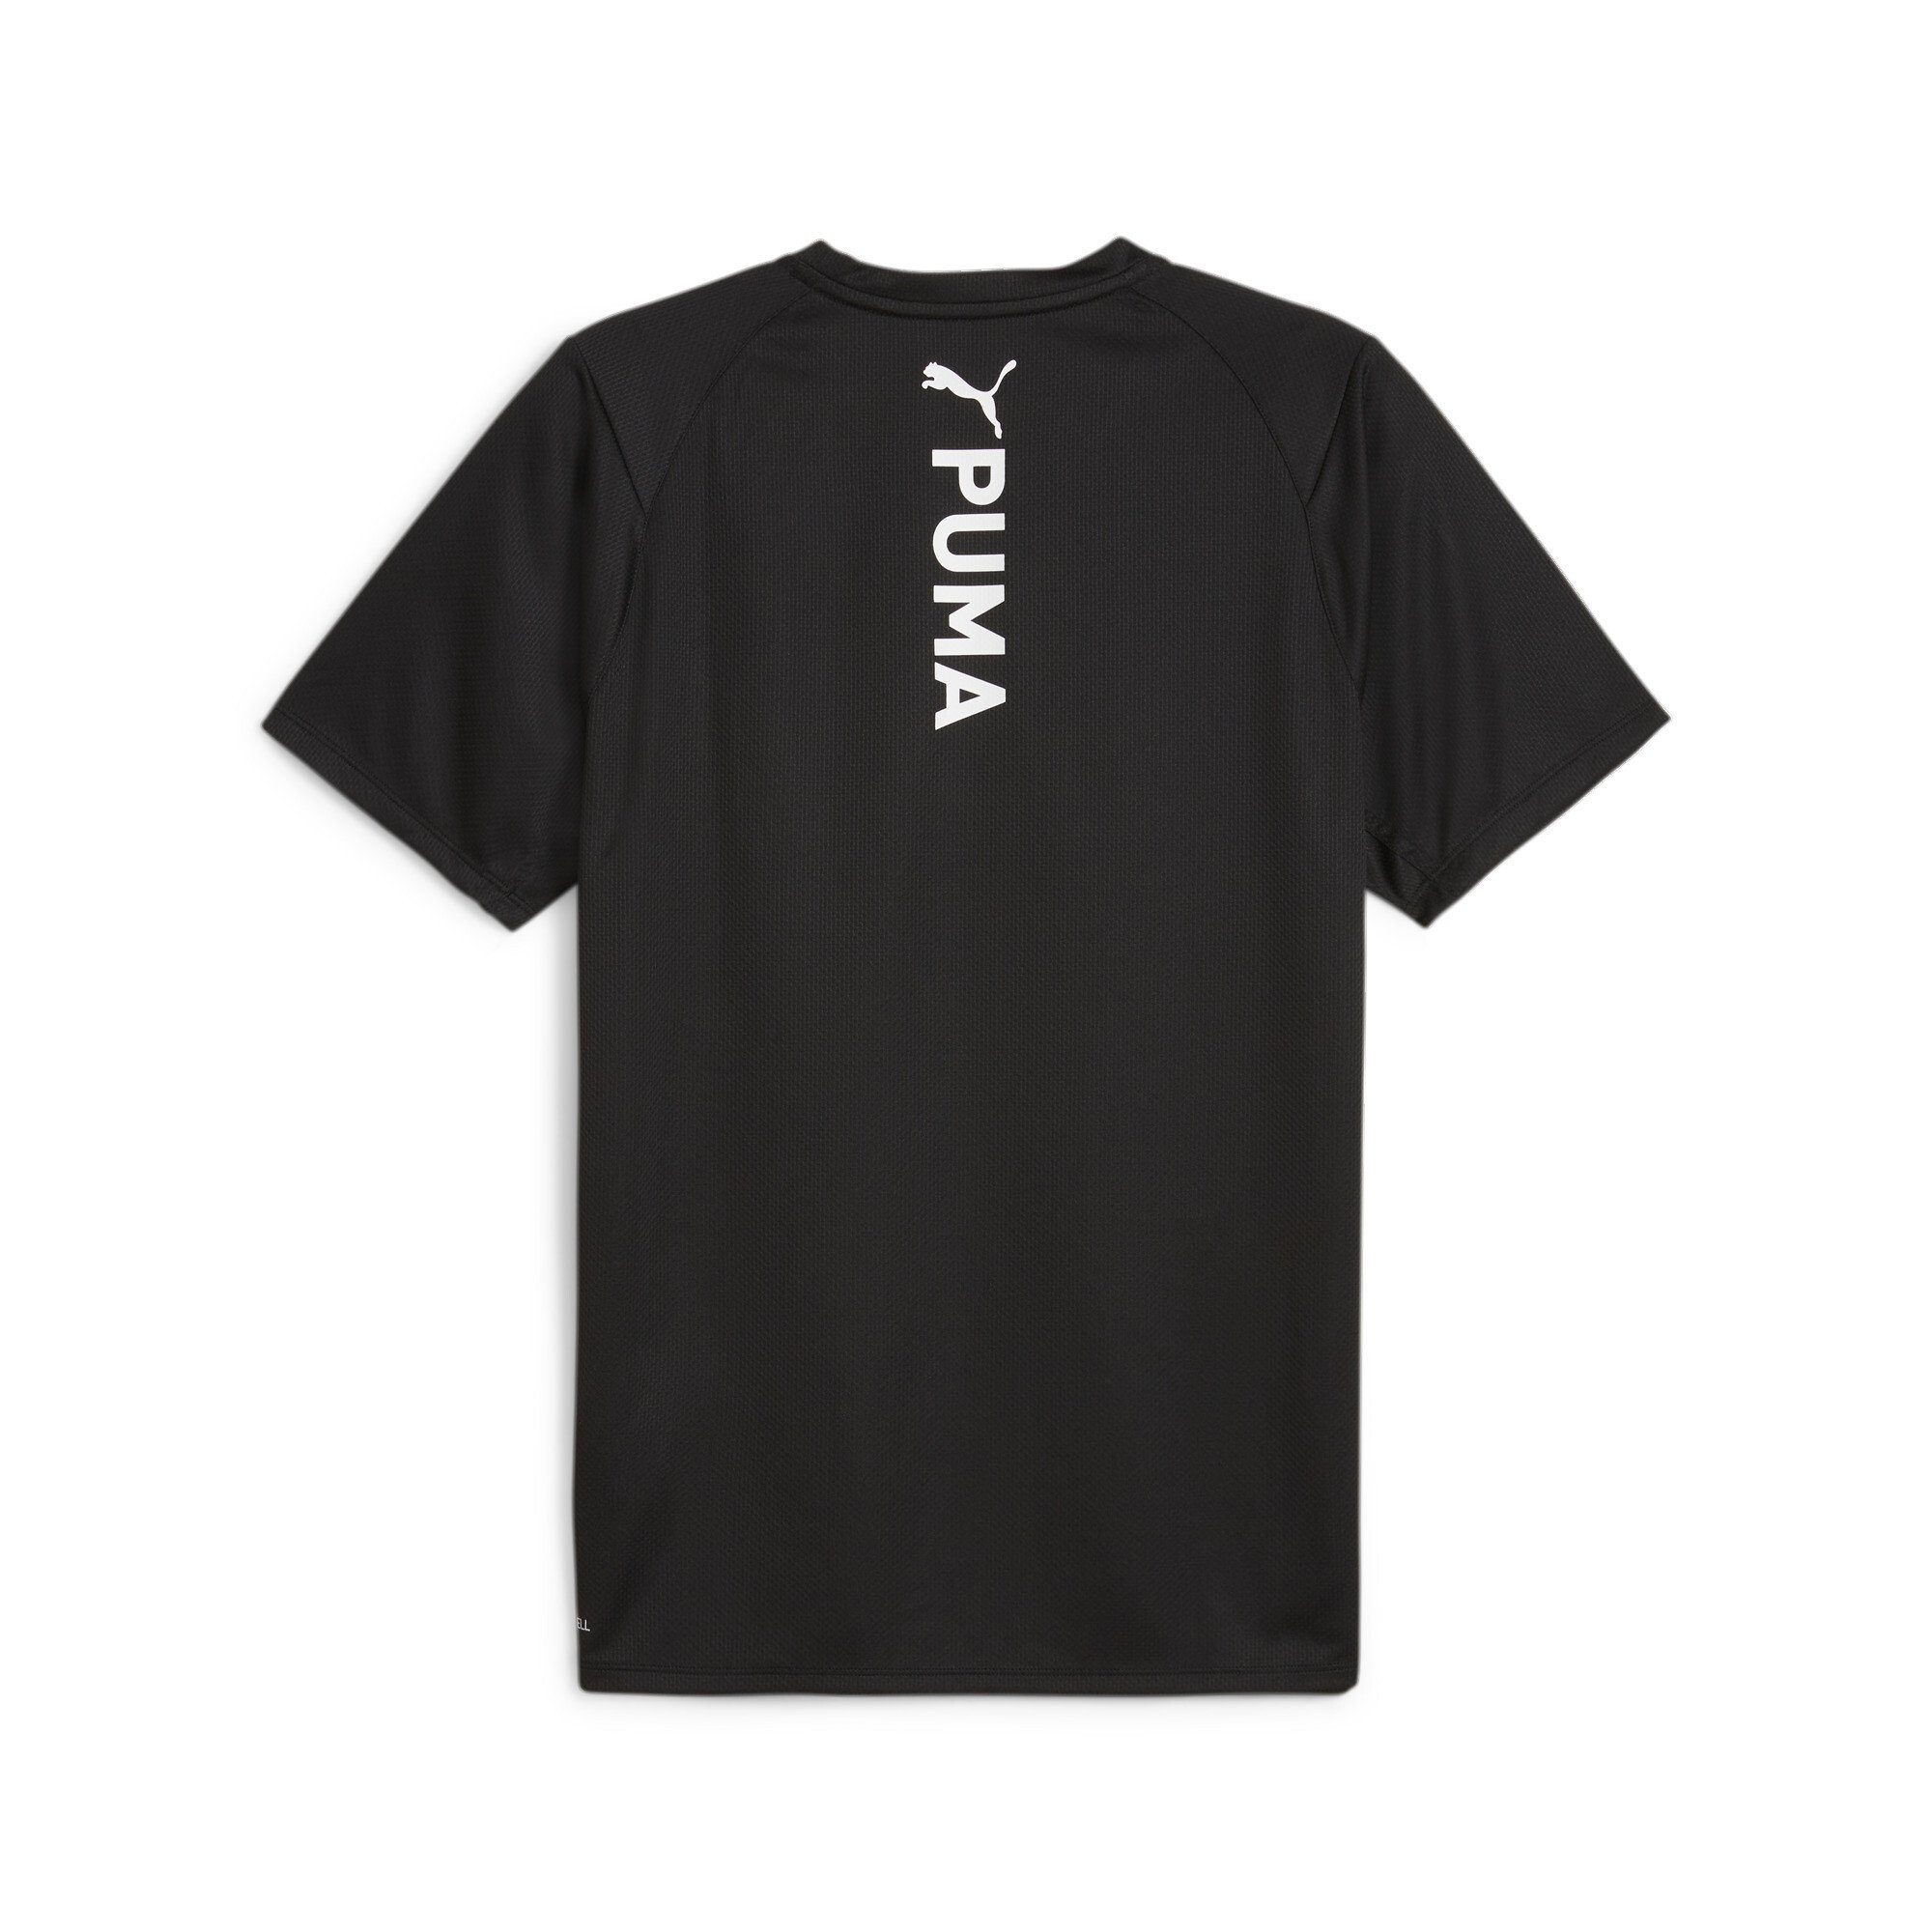 PUMA FIT Trainingsshirt PUMA Erwachsene Ultrabreathe Black T-Shirt